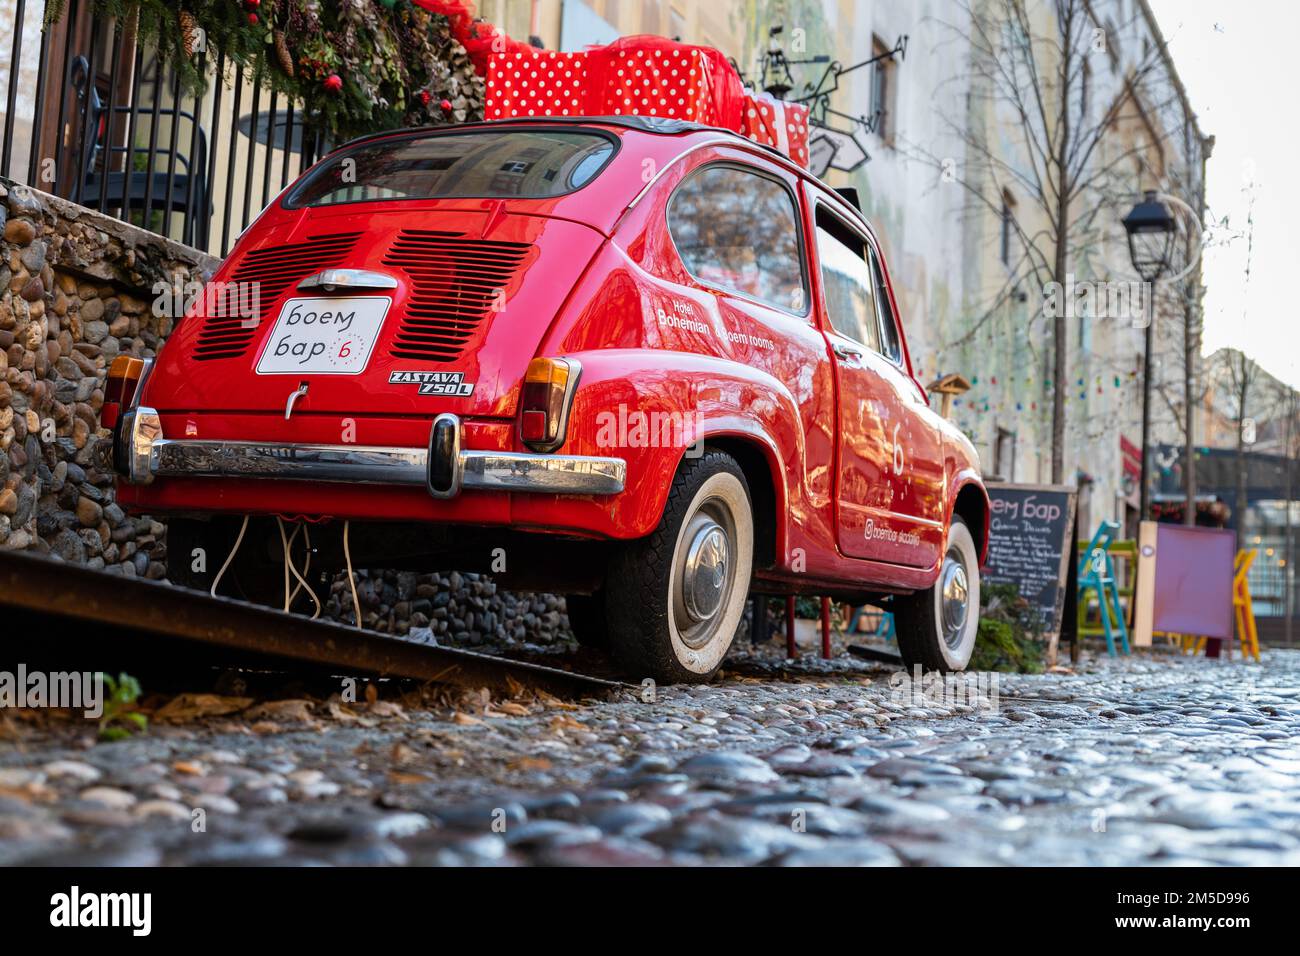 Belgrade, Serbia - December 23, 2022: Oldtimer showcase red car with Christmas presents on the roof in the Skadarlija street in Belgrade, Serbia Stock Photo